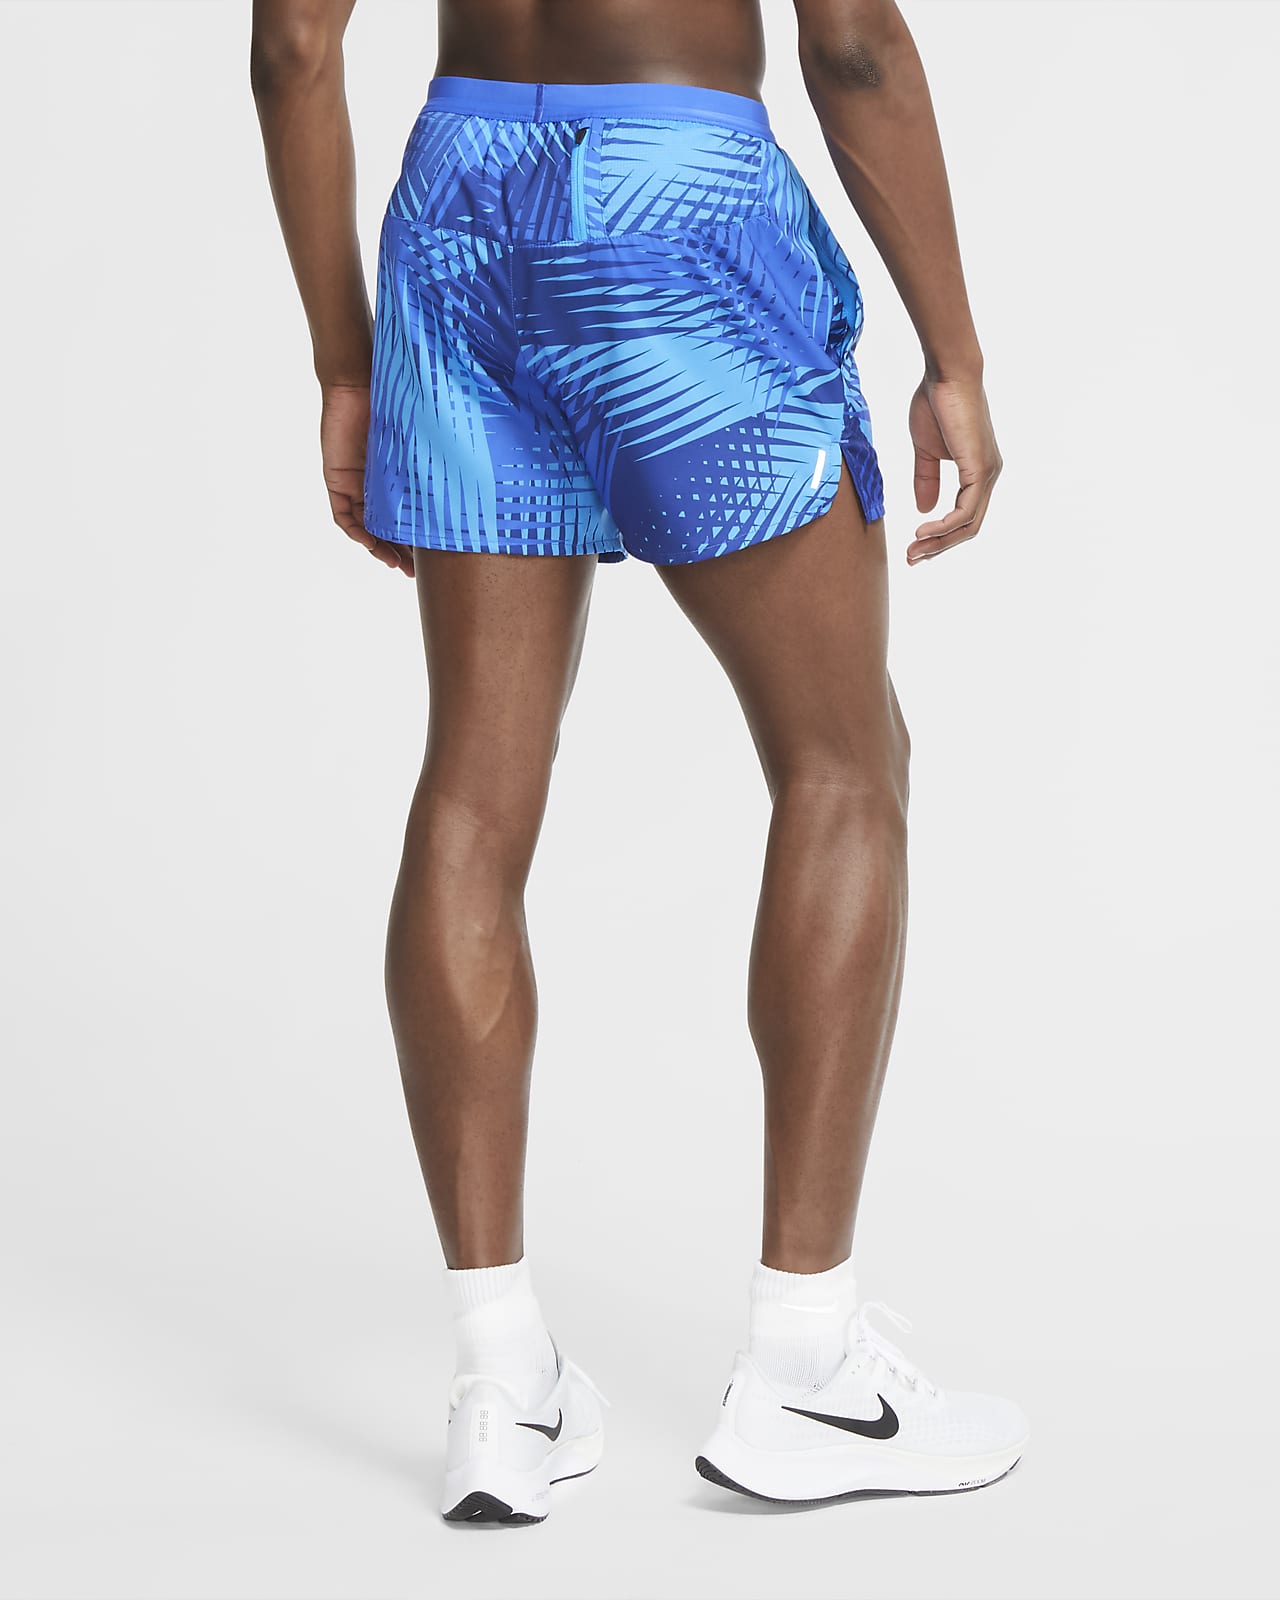 Nike Team USA Flex Stride Men's Running Shorts